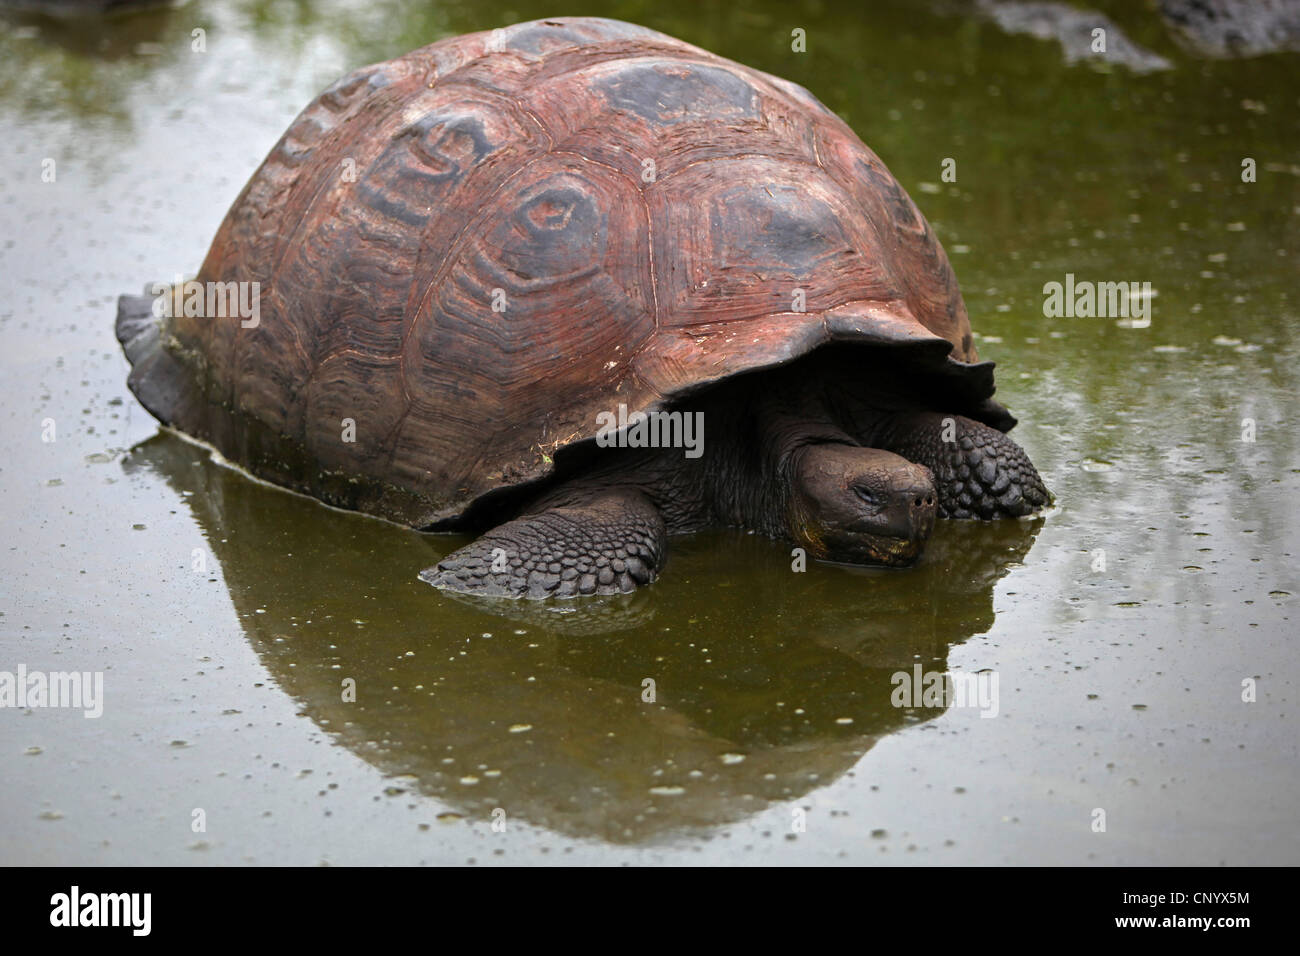 Galapagos giant tortoise (Testudo elephantopus porteri, Geochelone elephantopus porteri, Chelonoides elephantopus porteri), in water, Ecuador, Galapagos Islands Stock Photo